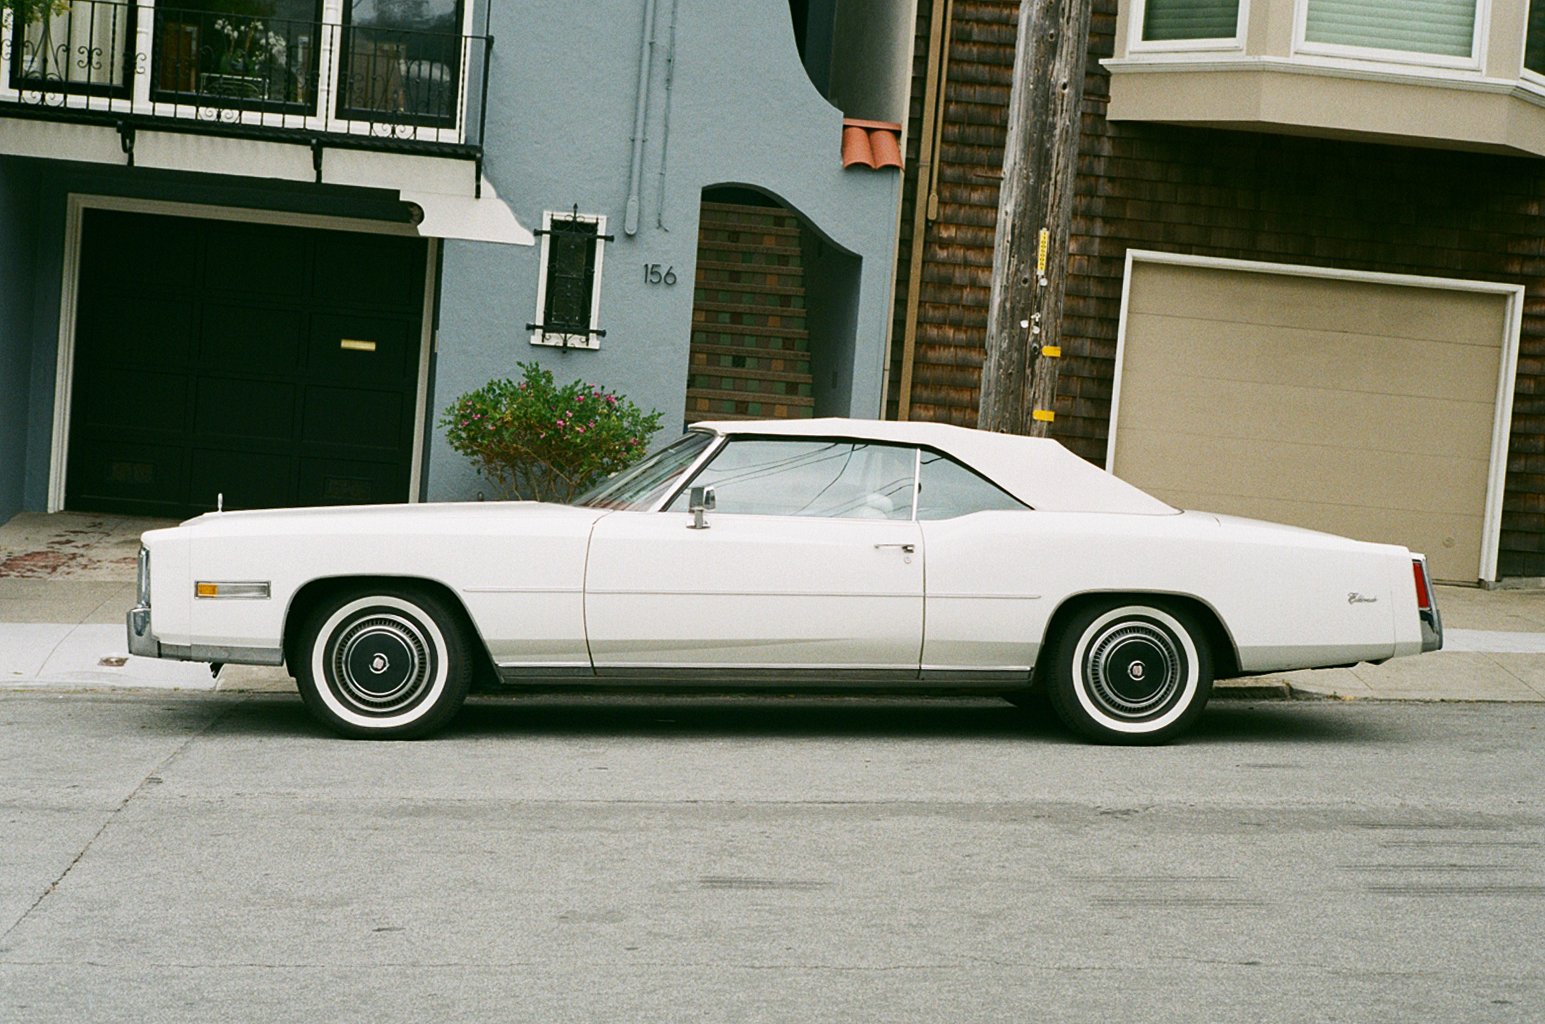  White Cadillac in San Francisco 